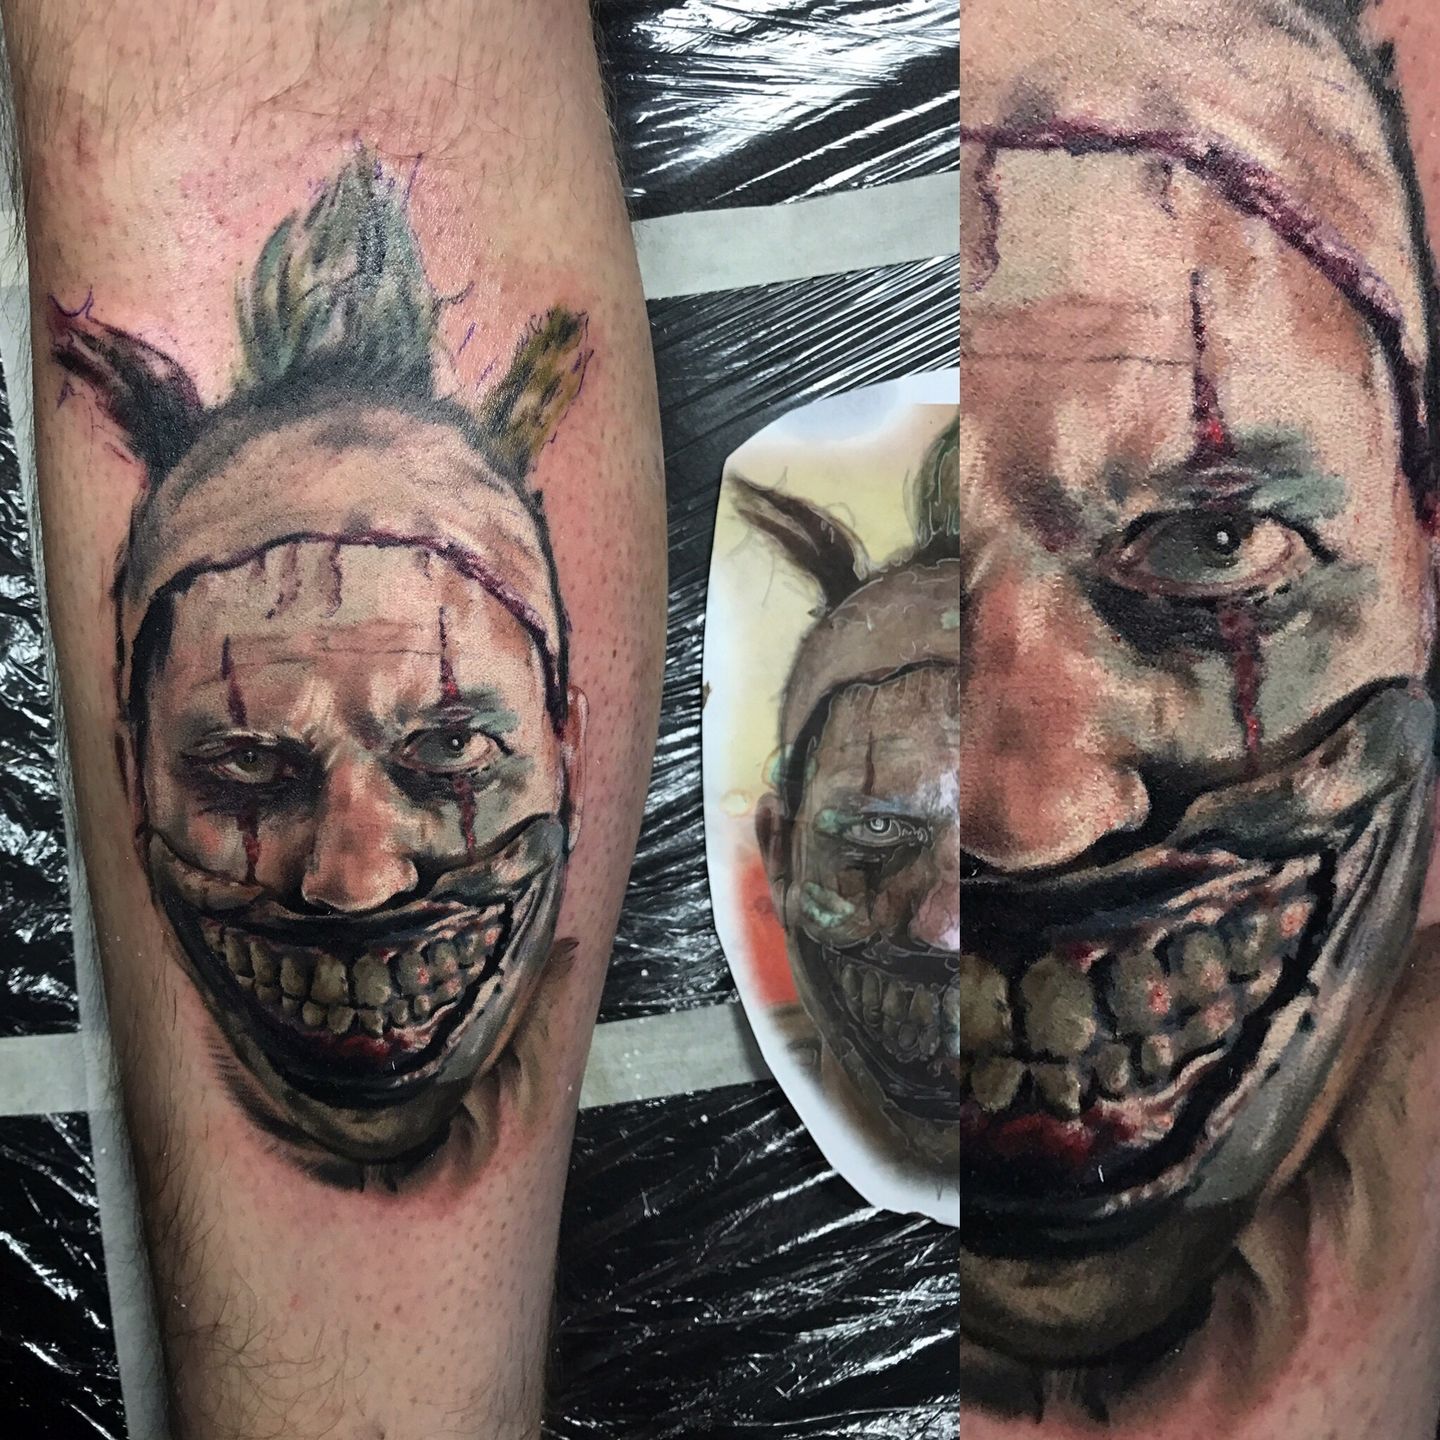 Portrait of Twisty the Clown from American Horror Story Freakshow tattoo  by Evan Olin  Tattoos